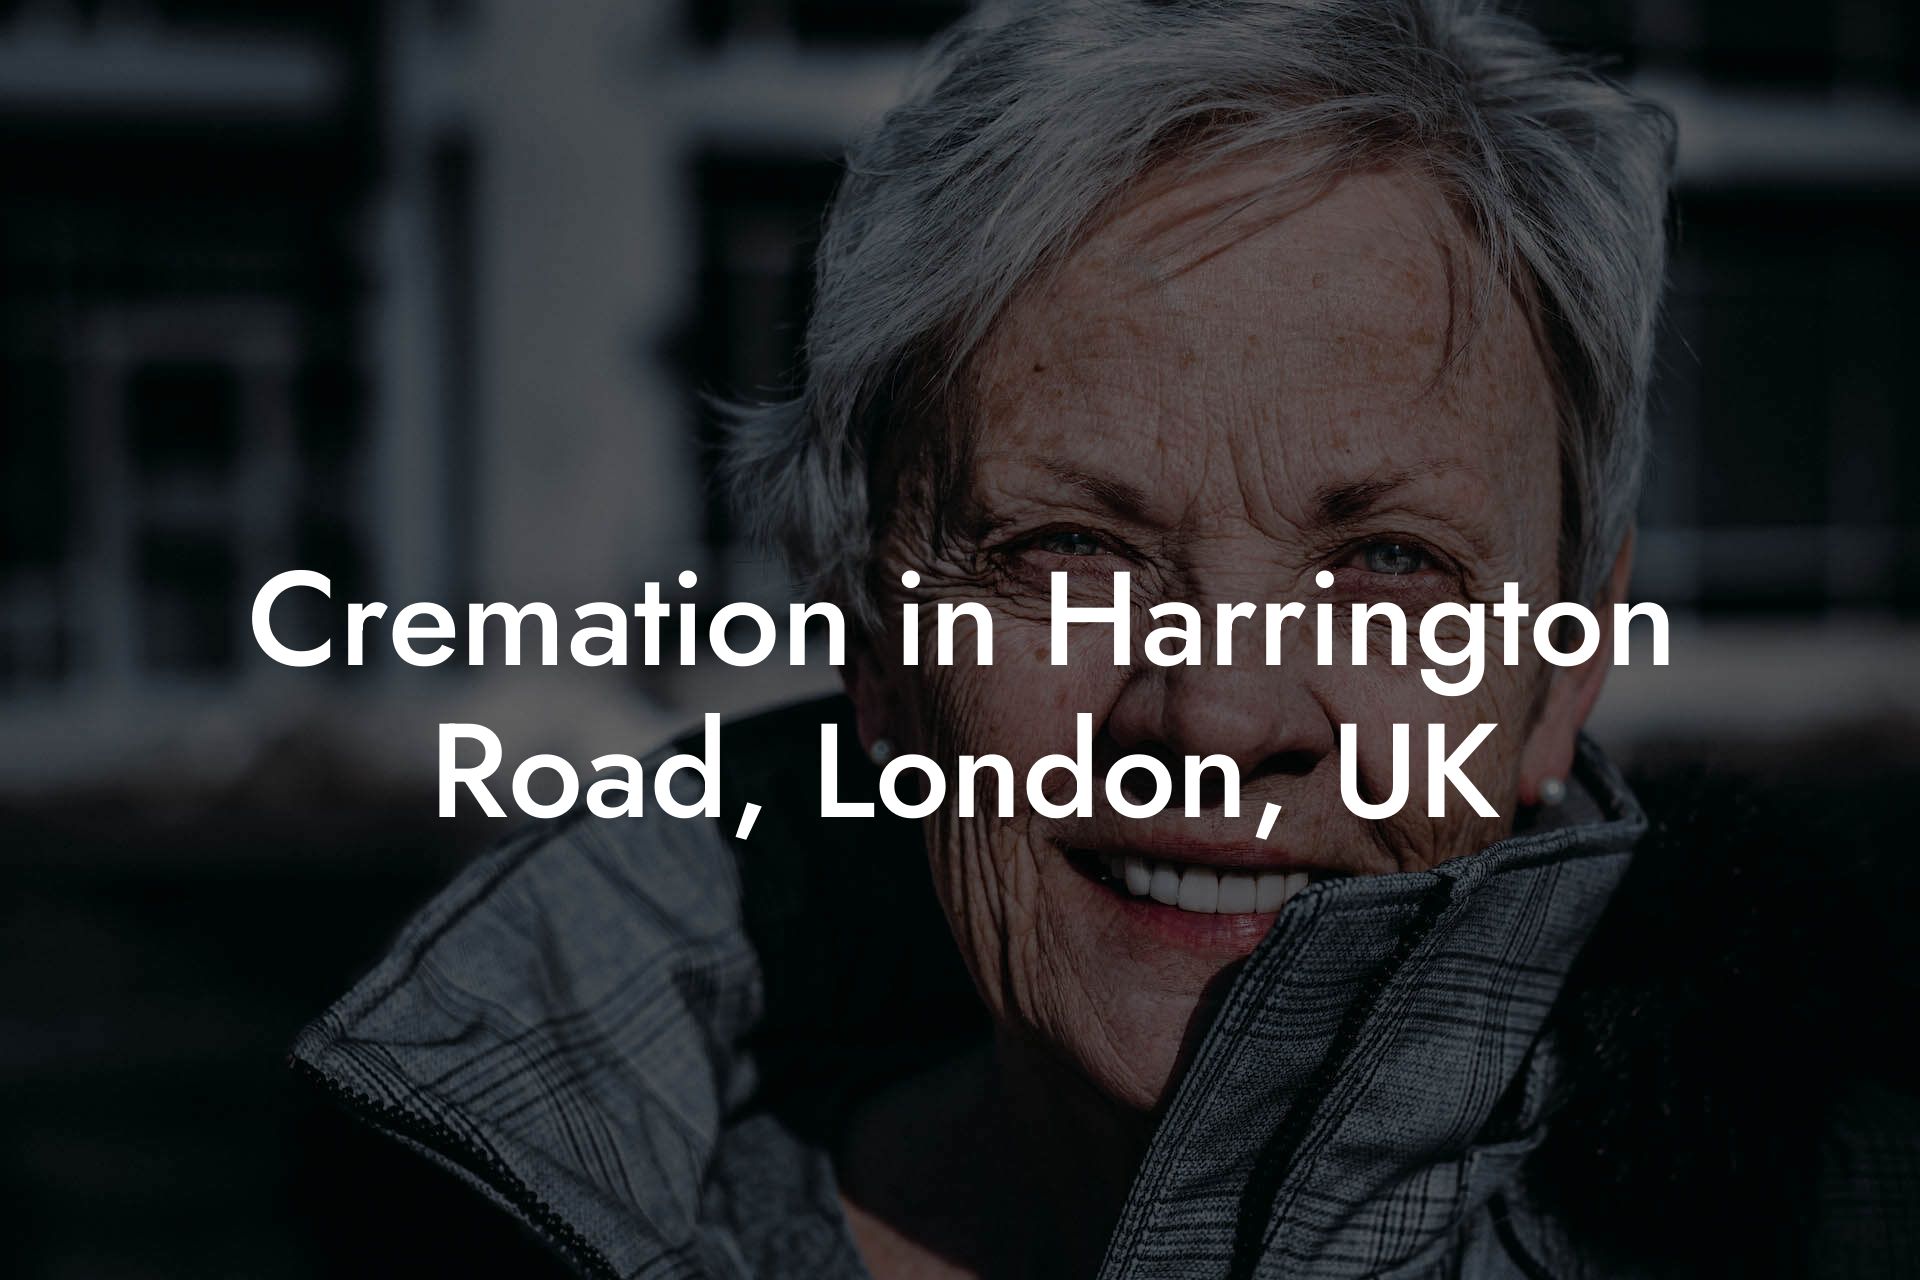 Cremation in Harrington Road, London, UK